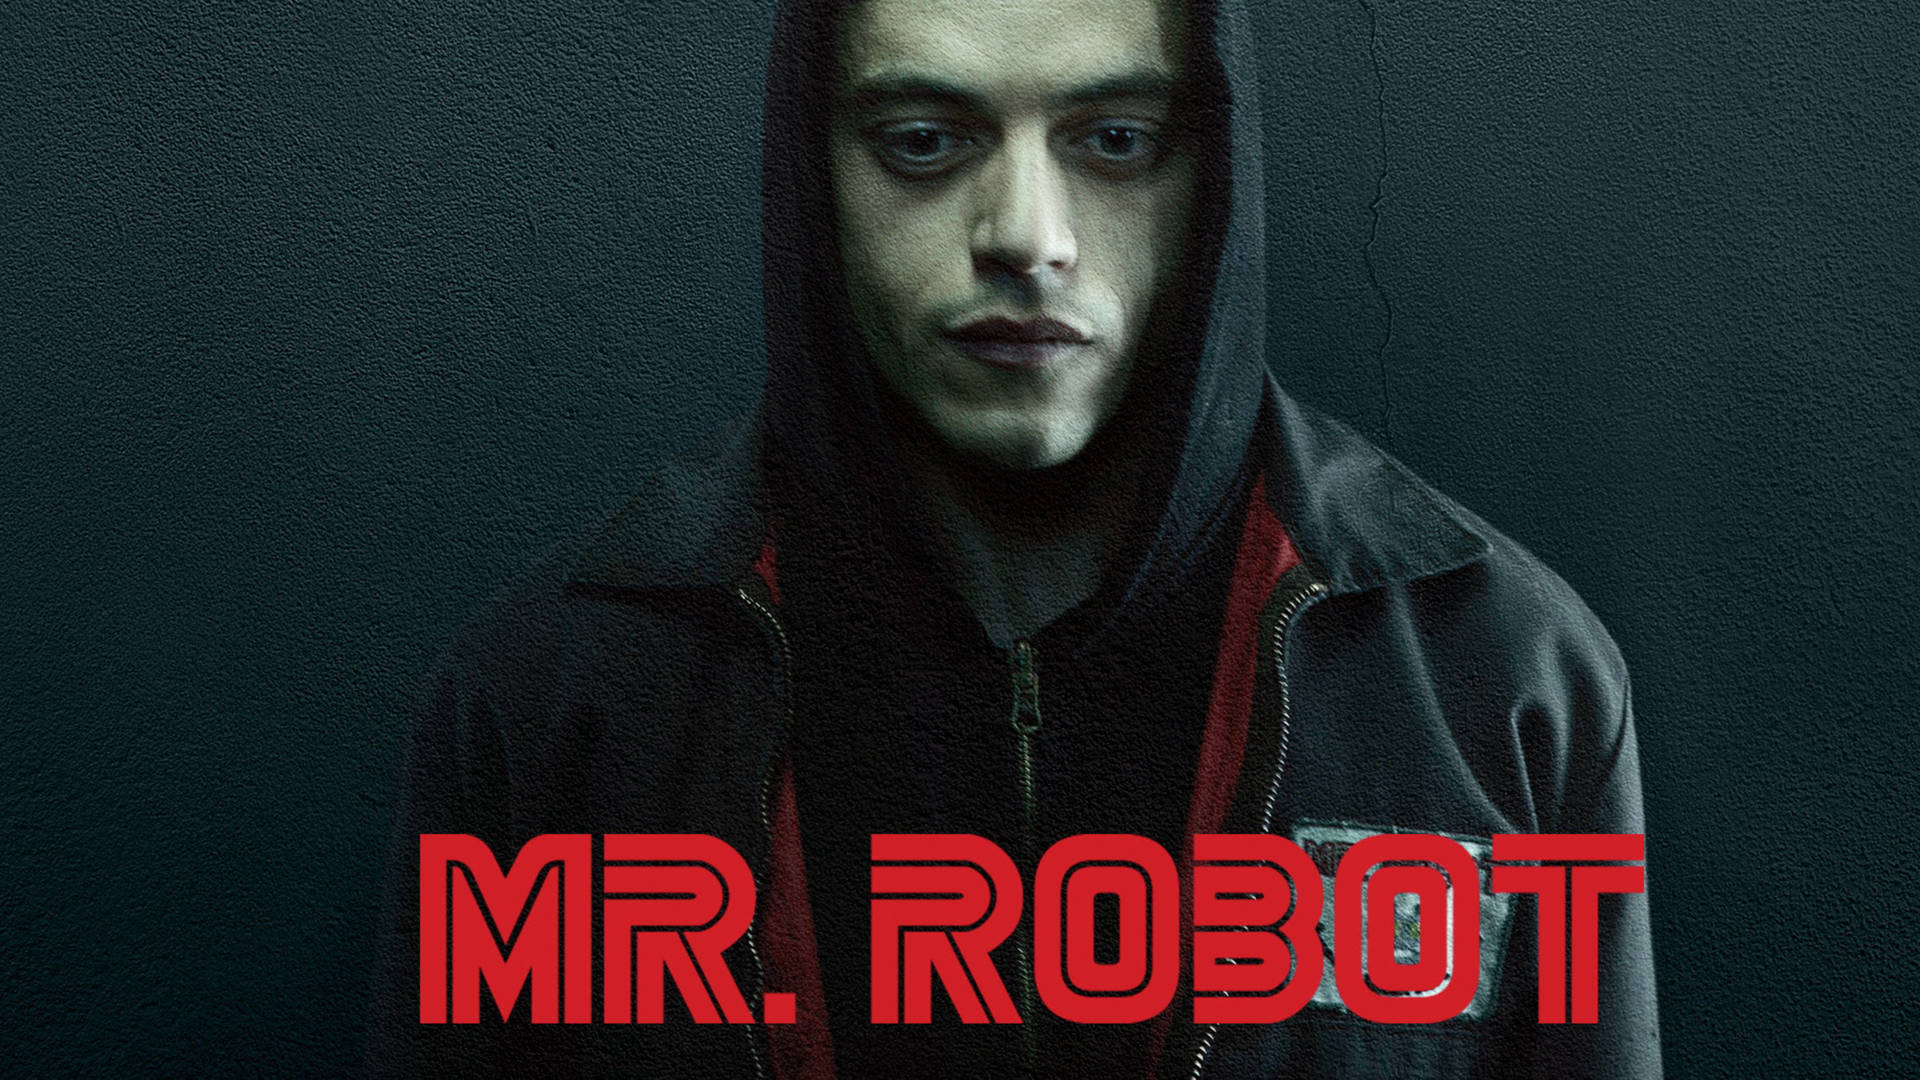 Mr. Robot Tv Show 2 Poster Background